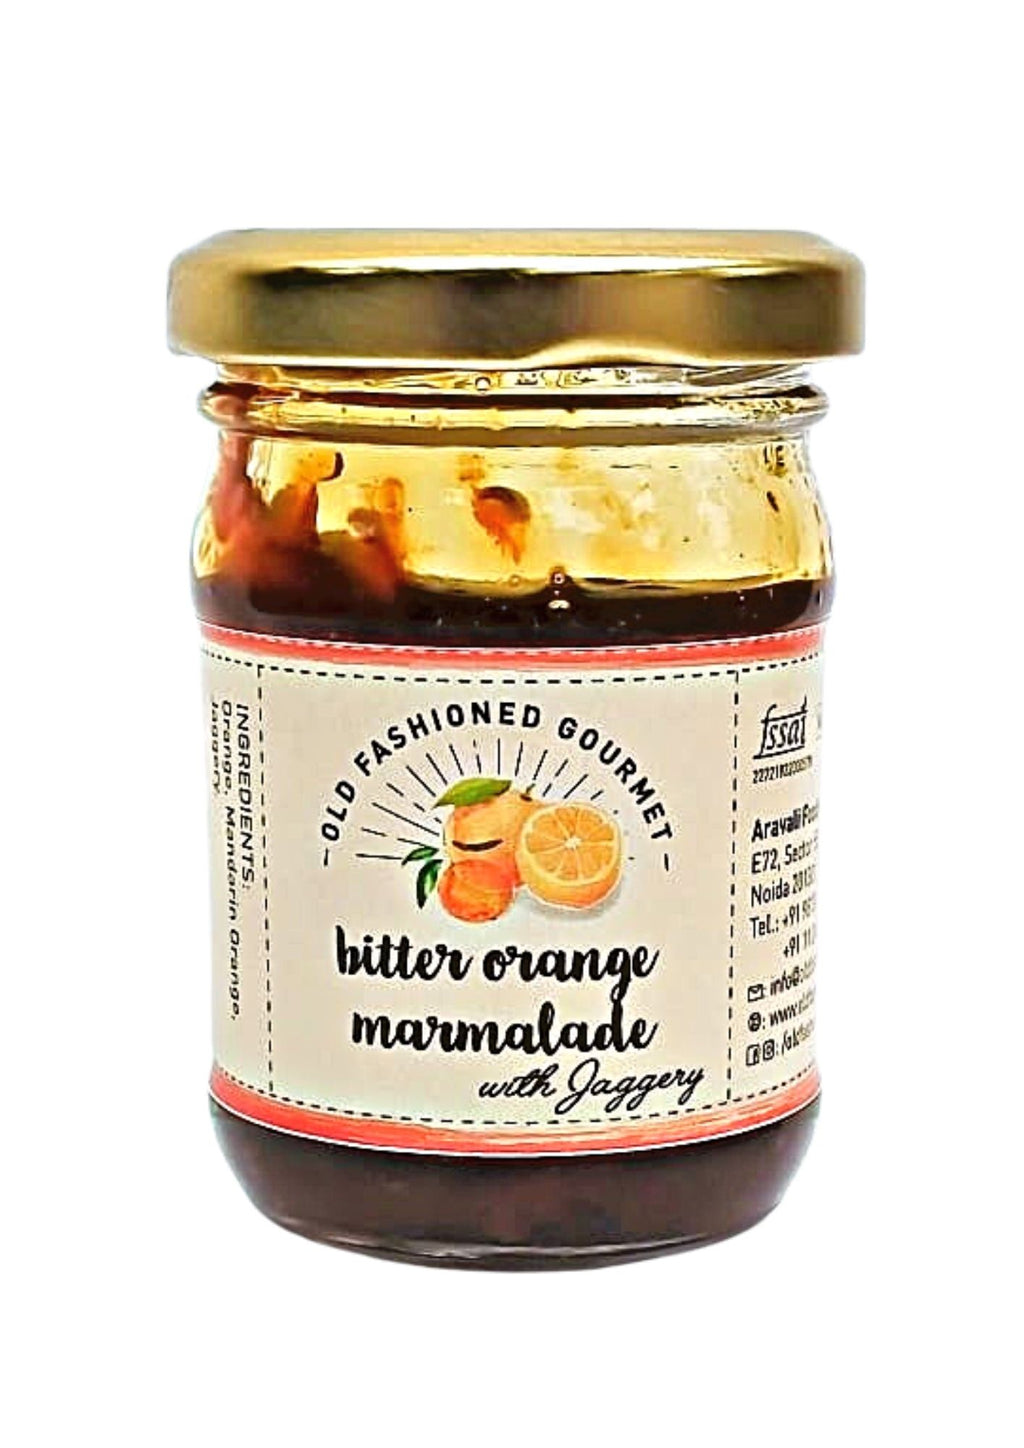 Bitter orange marmalade with Jaggery